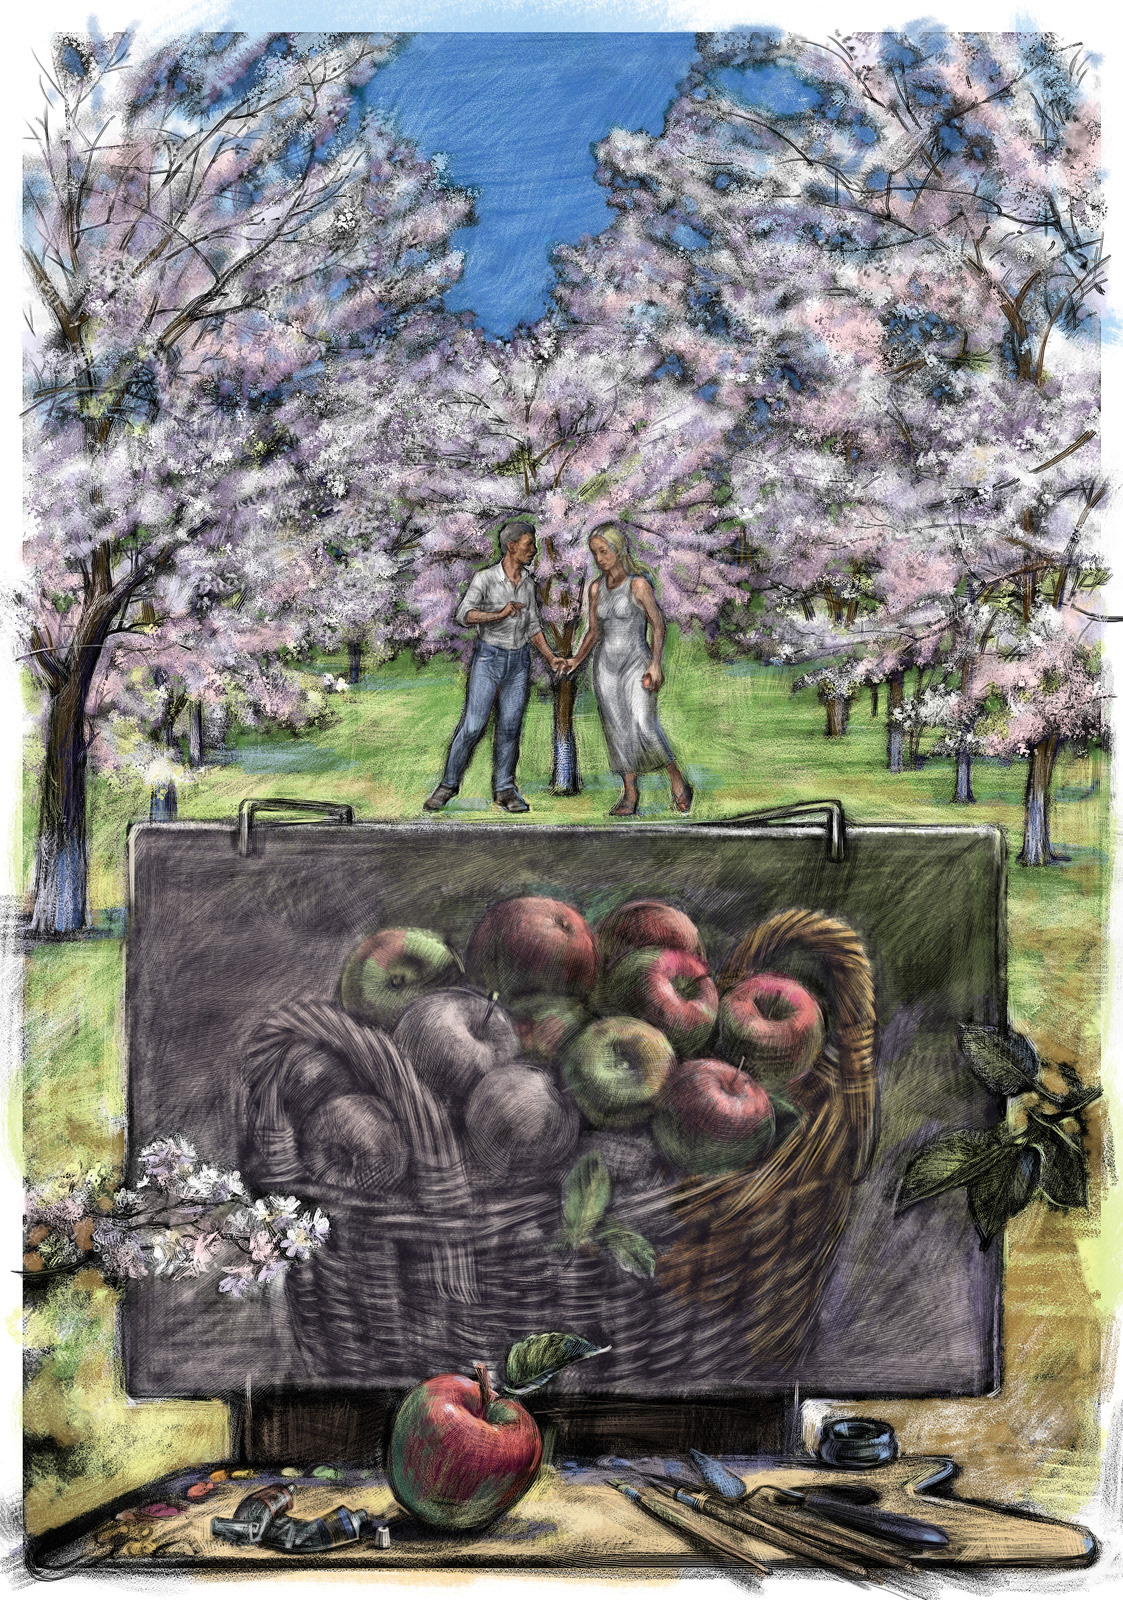 ZapovednikSkazok сказка eden Adam Eve paradise apple blossoms spring fairytale apple